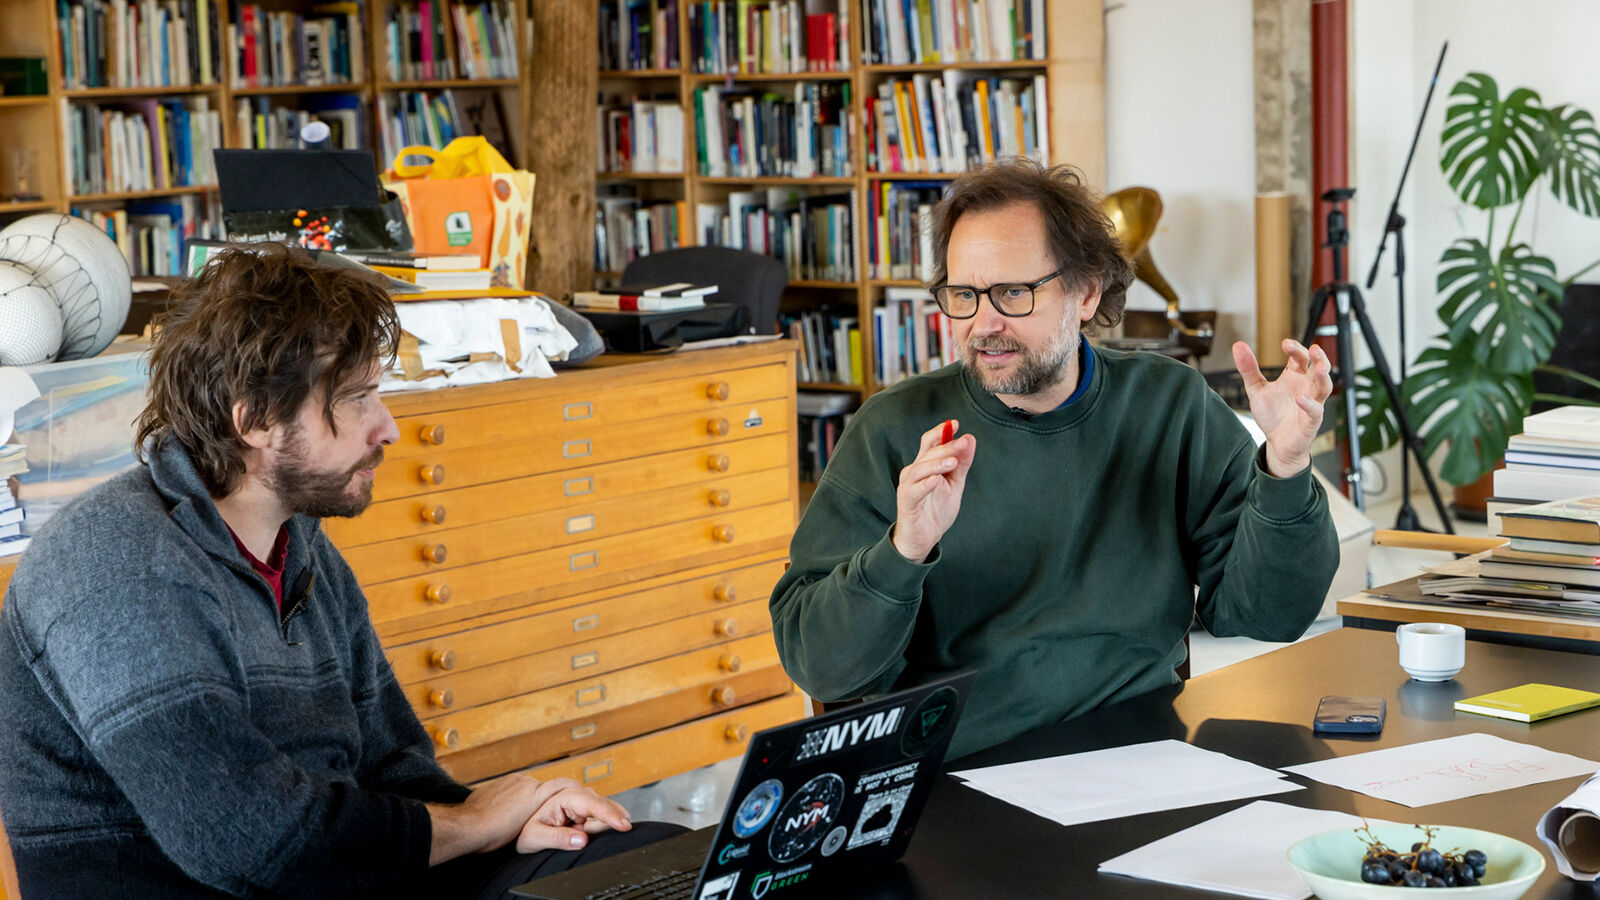 (Image 5) Tomas Saraceno and Harry Halpin in collaboration at Tomas Saraceno's studio in Berlin